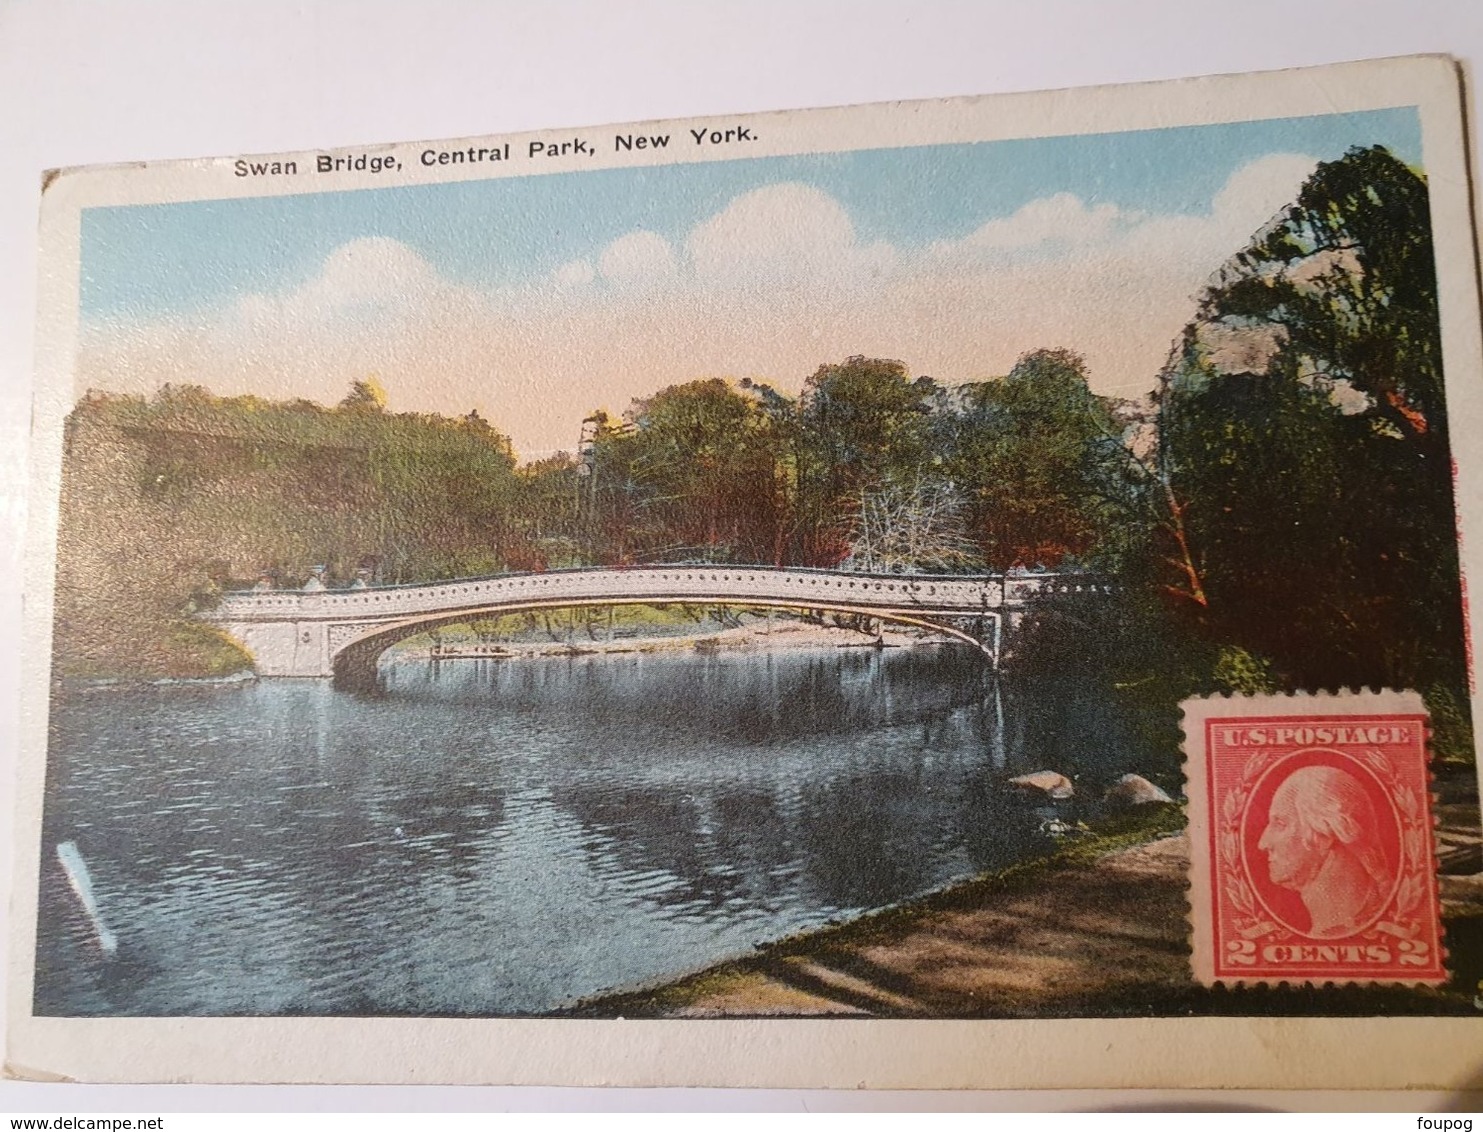 NEW YORK CITY SWAN BRIDGE CENTRAL PARK - Central Park